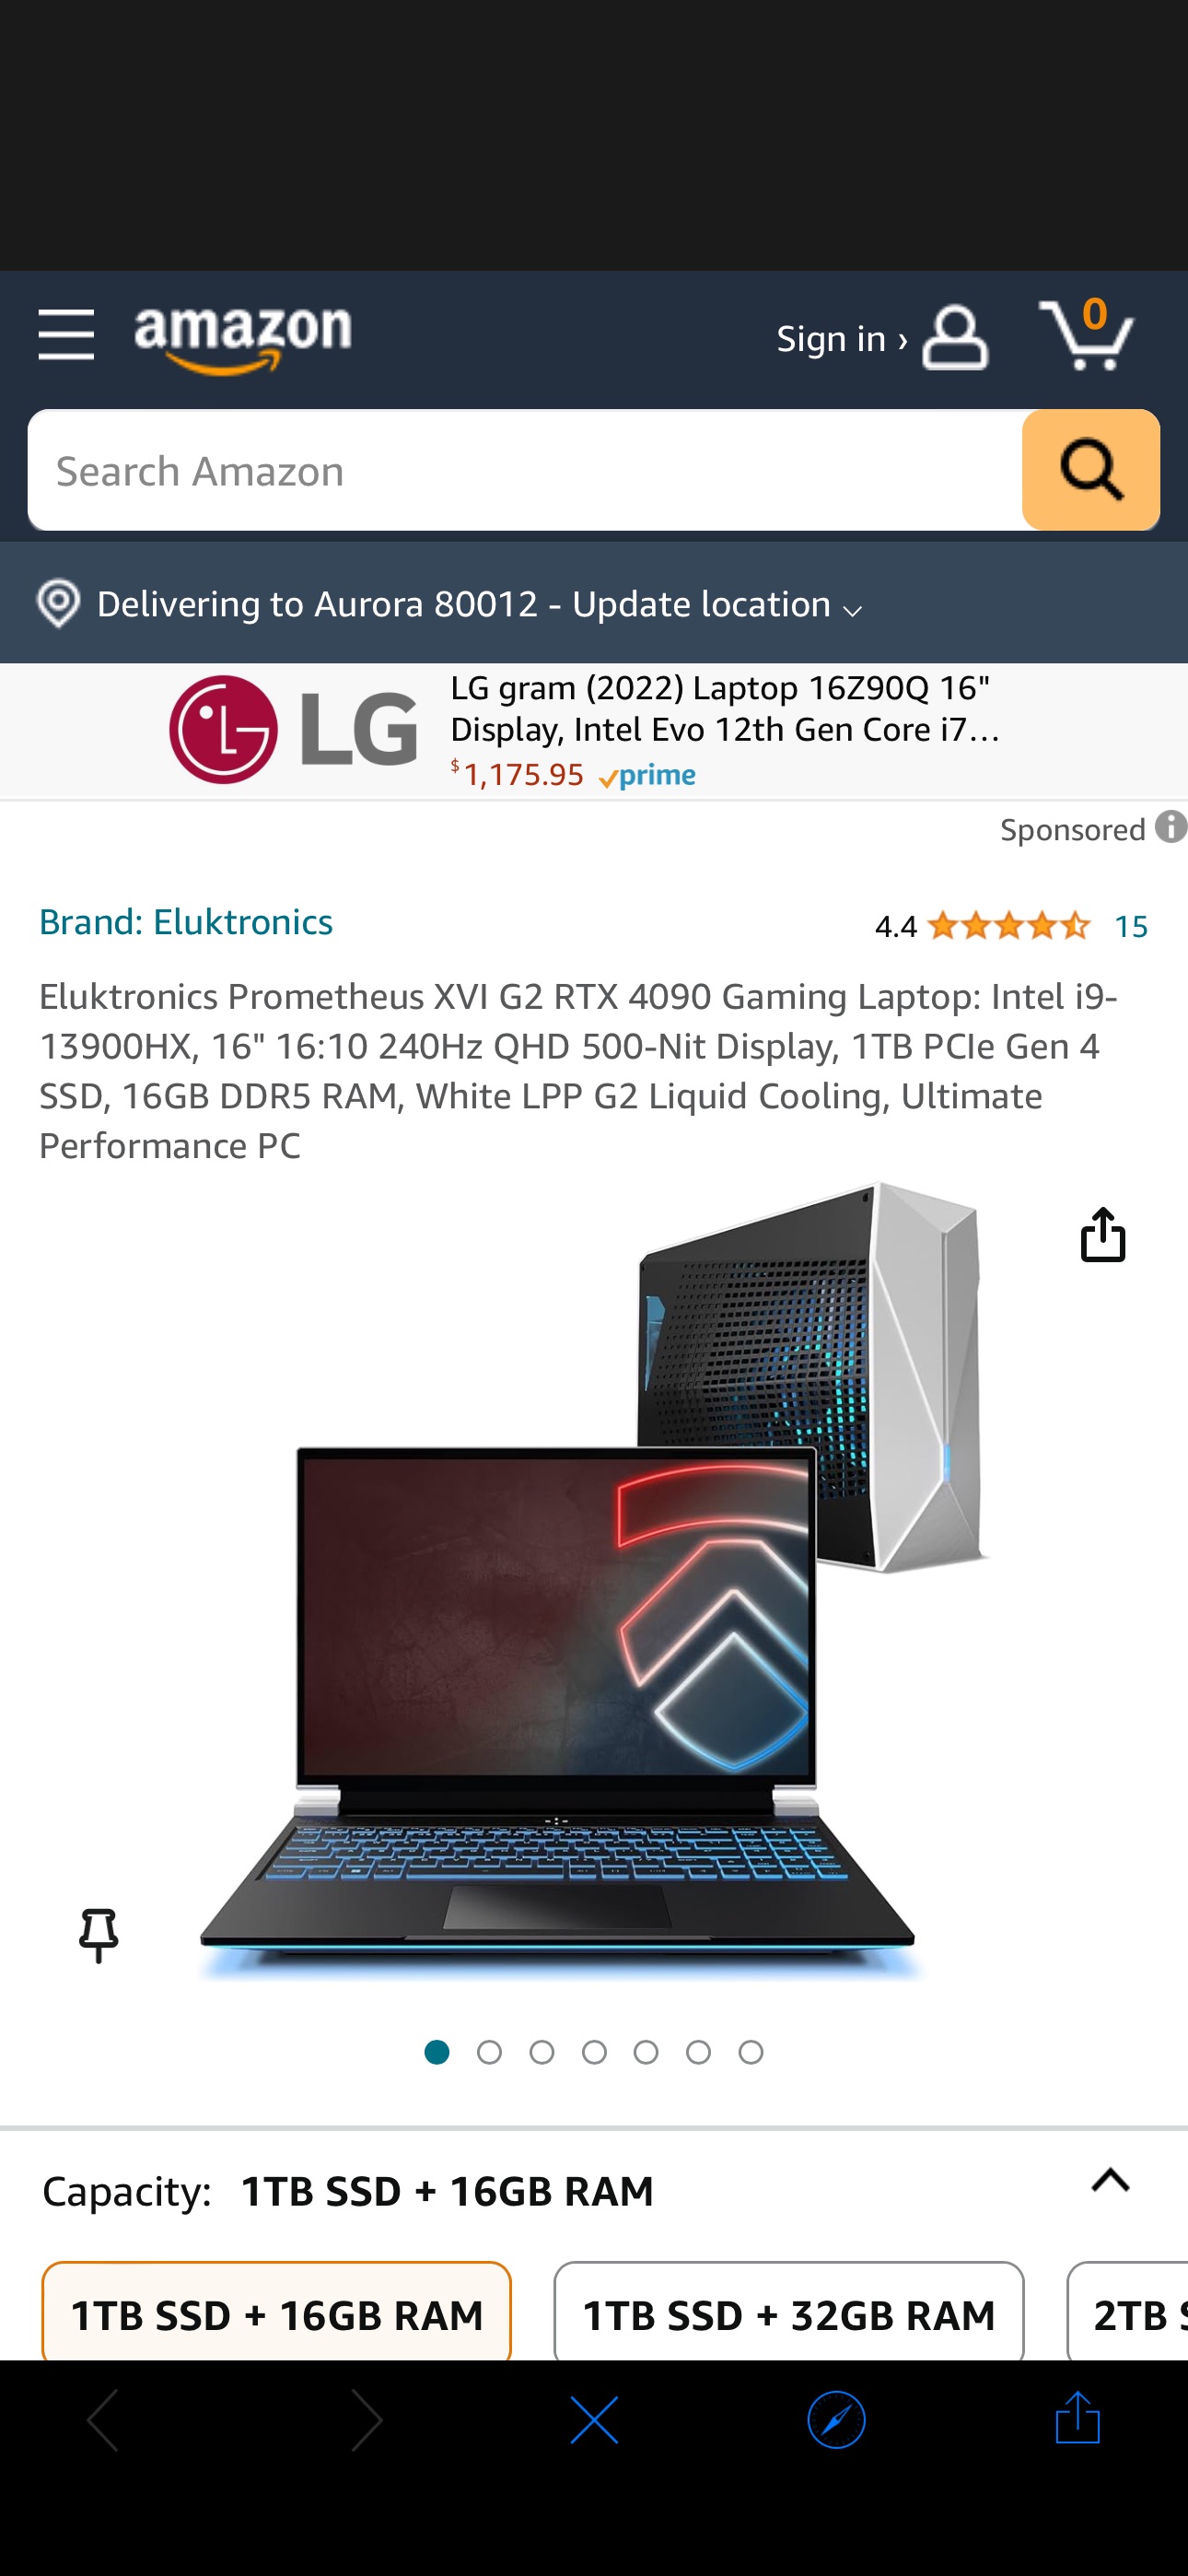 Amazon.com: Eluktronics Prometheus XVI G2 RTX 4090 Gaming Laptop: Intel i9-13900HX, 16" 16:10 240Hz QHD 500-Nit Display, 1TB PCIe Gen 4 SSD, 16GB DDR5 RAM, White LPP G2 Liquid Cooling, Ultimate Perfor